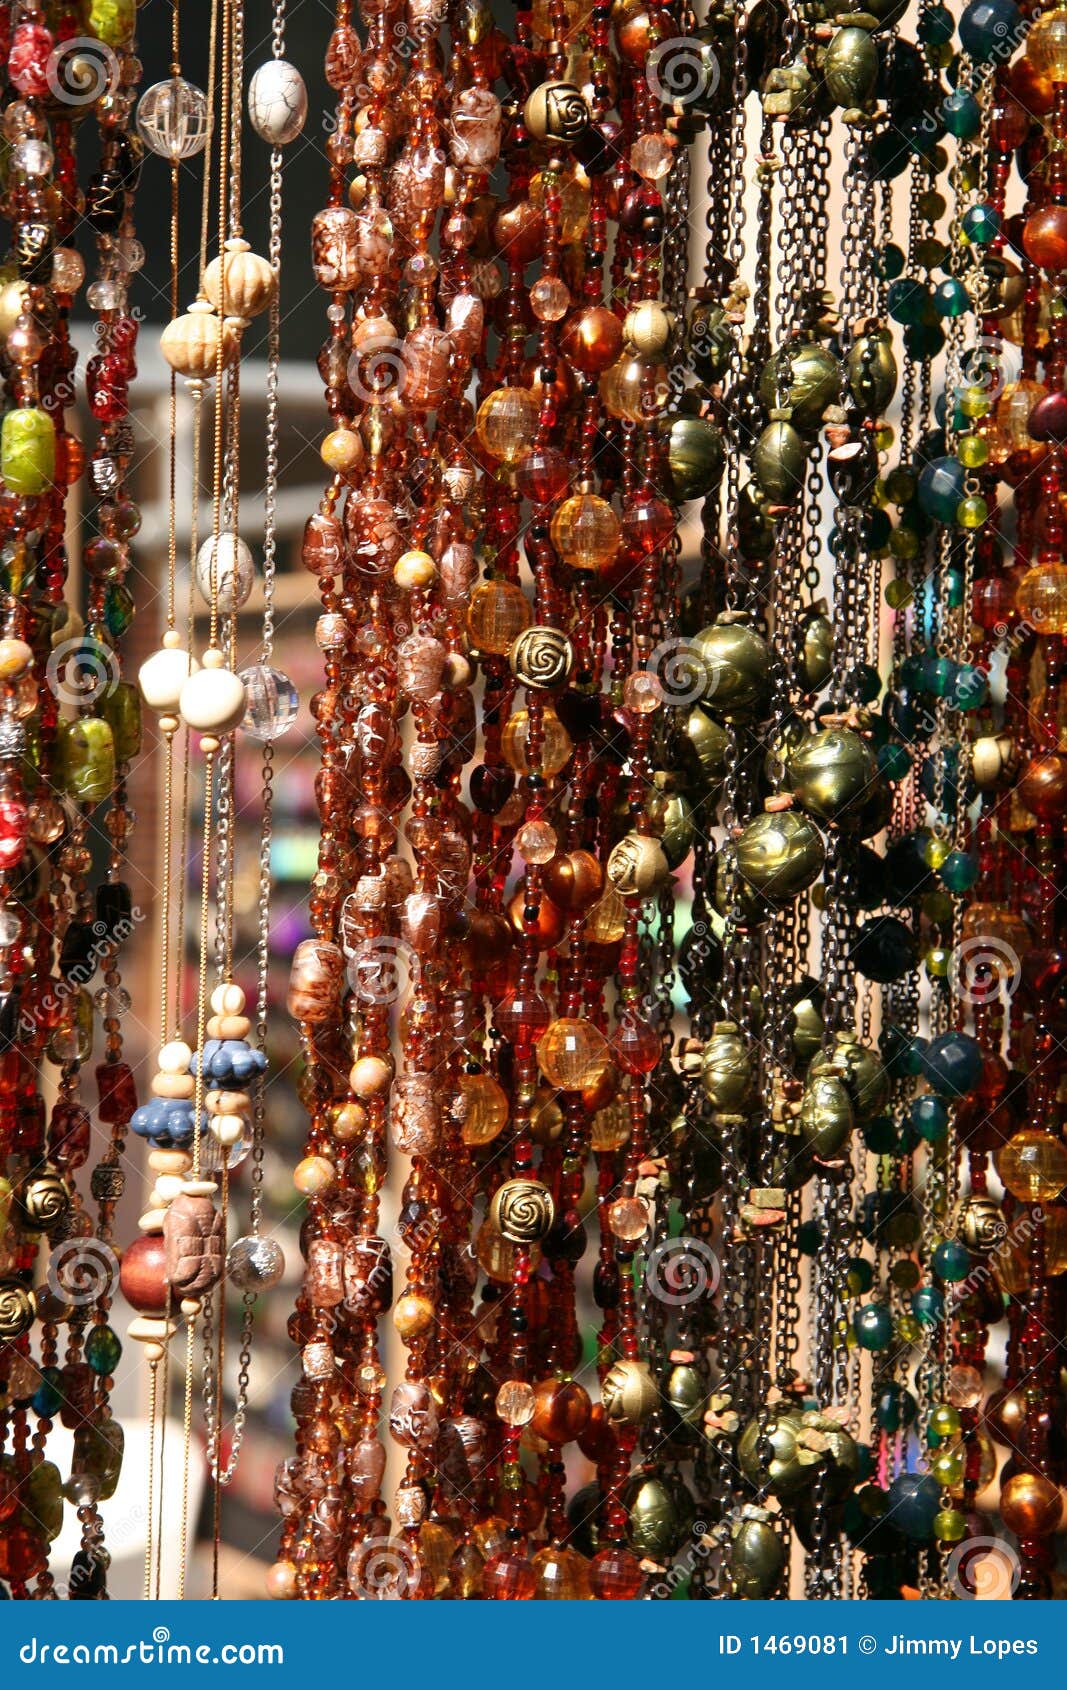 hanging textured necklaces